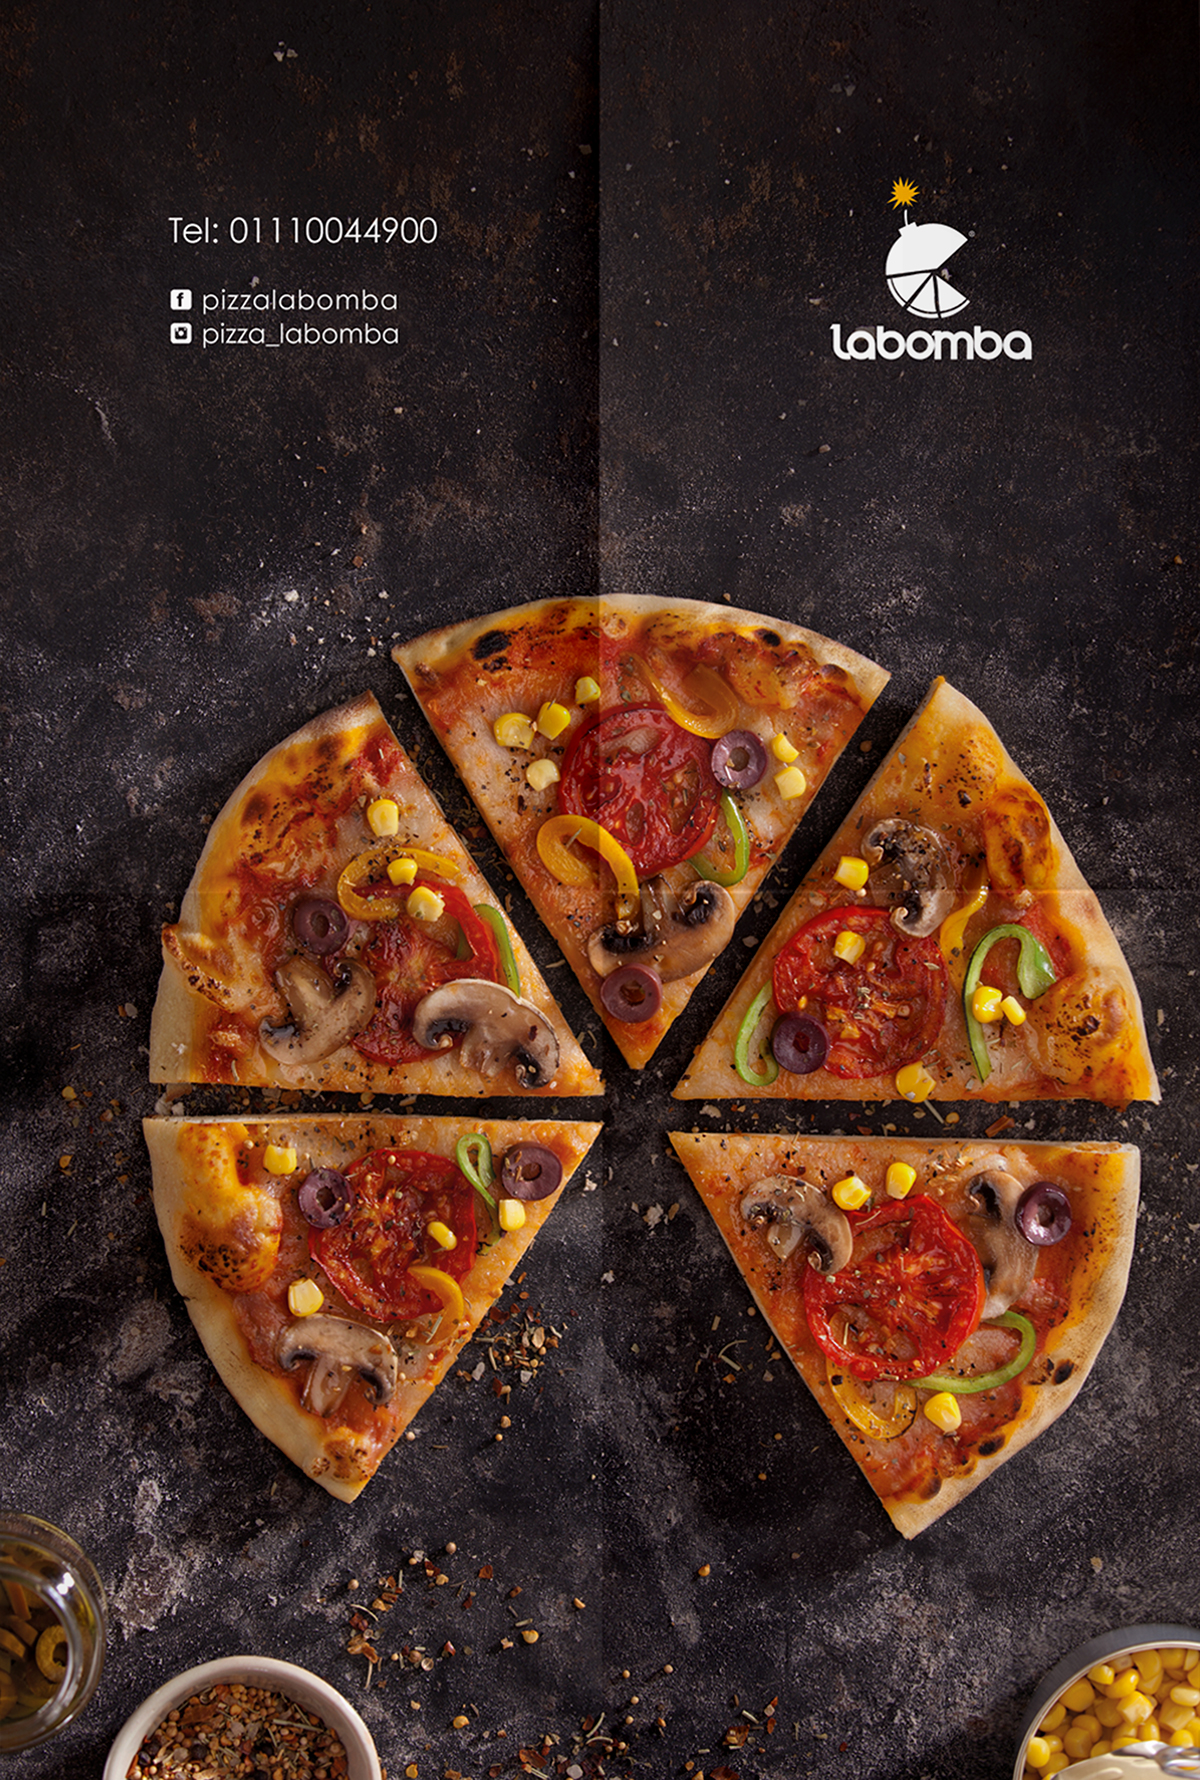 Pizza crust photo shoot vegeterian beef chicken pizzaria resturant social media posts uniform oven wood fire healthy